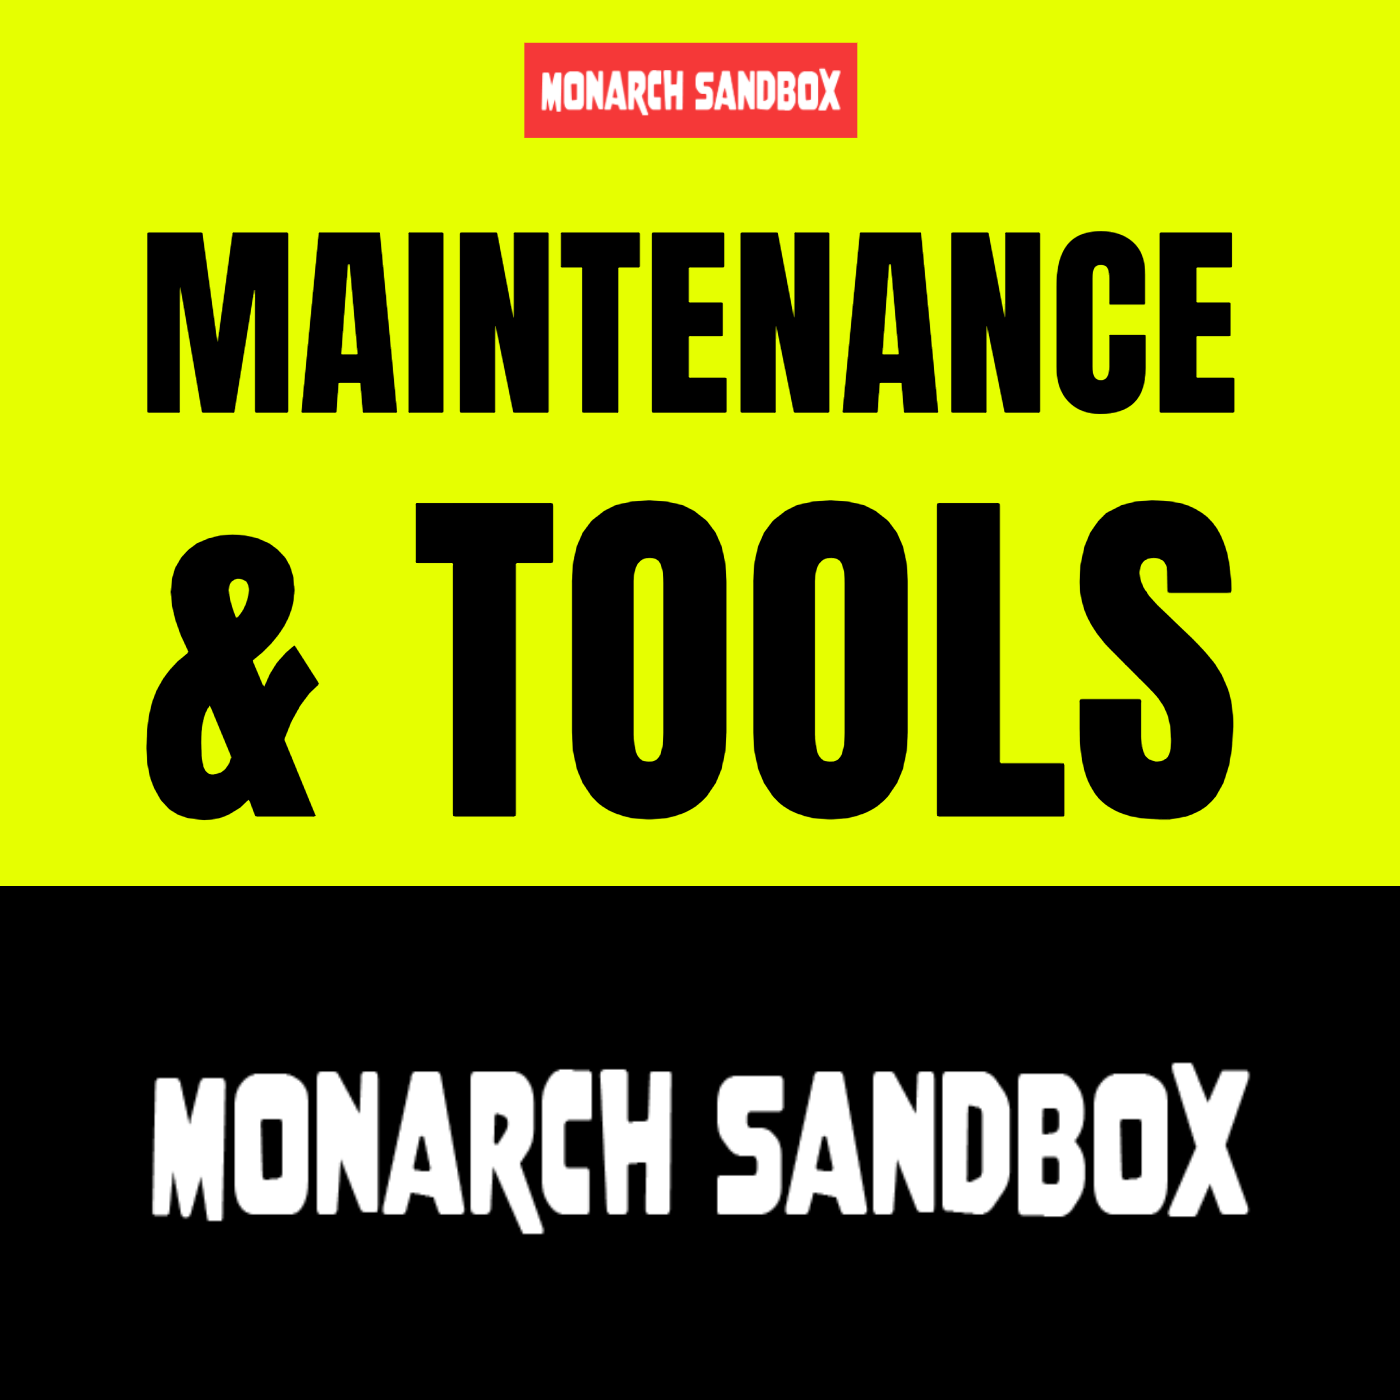 Maintenance & Tools